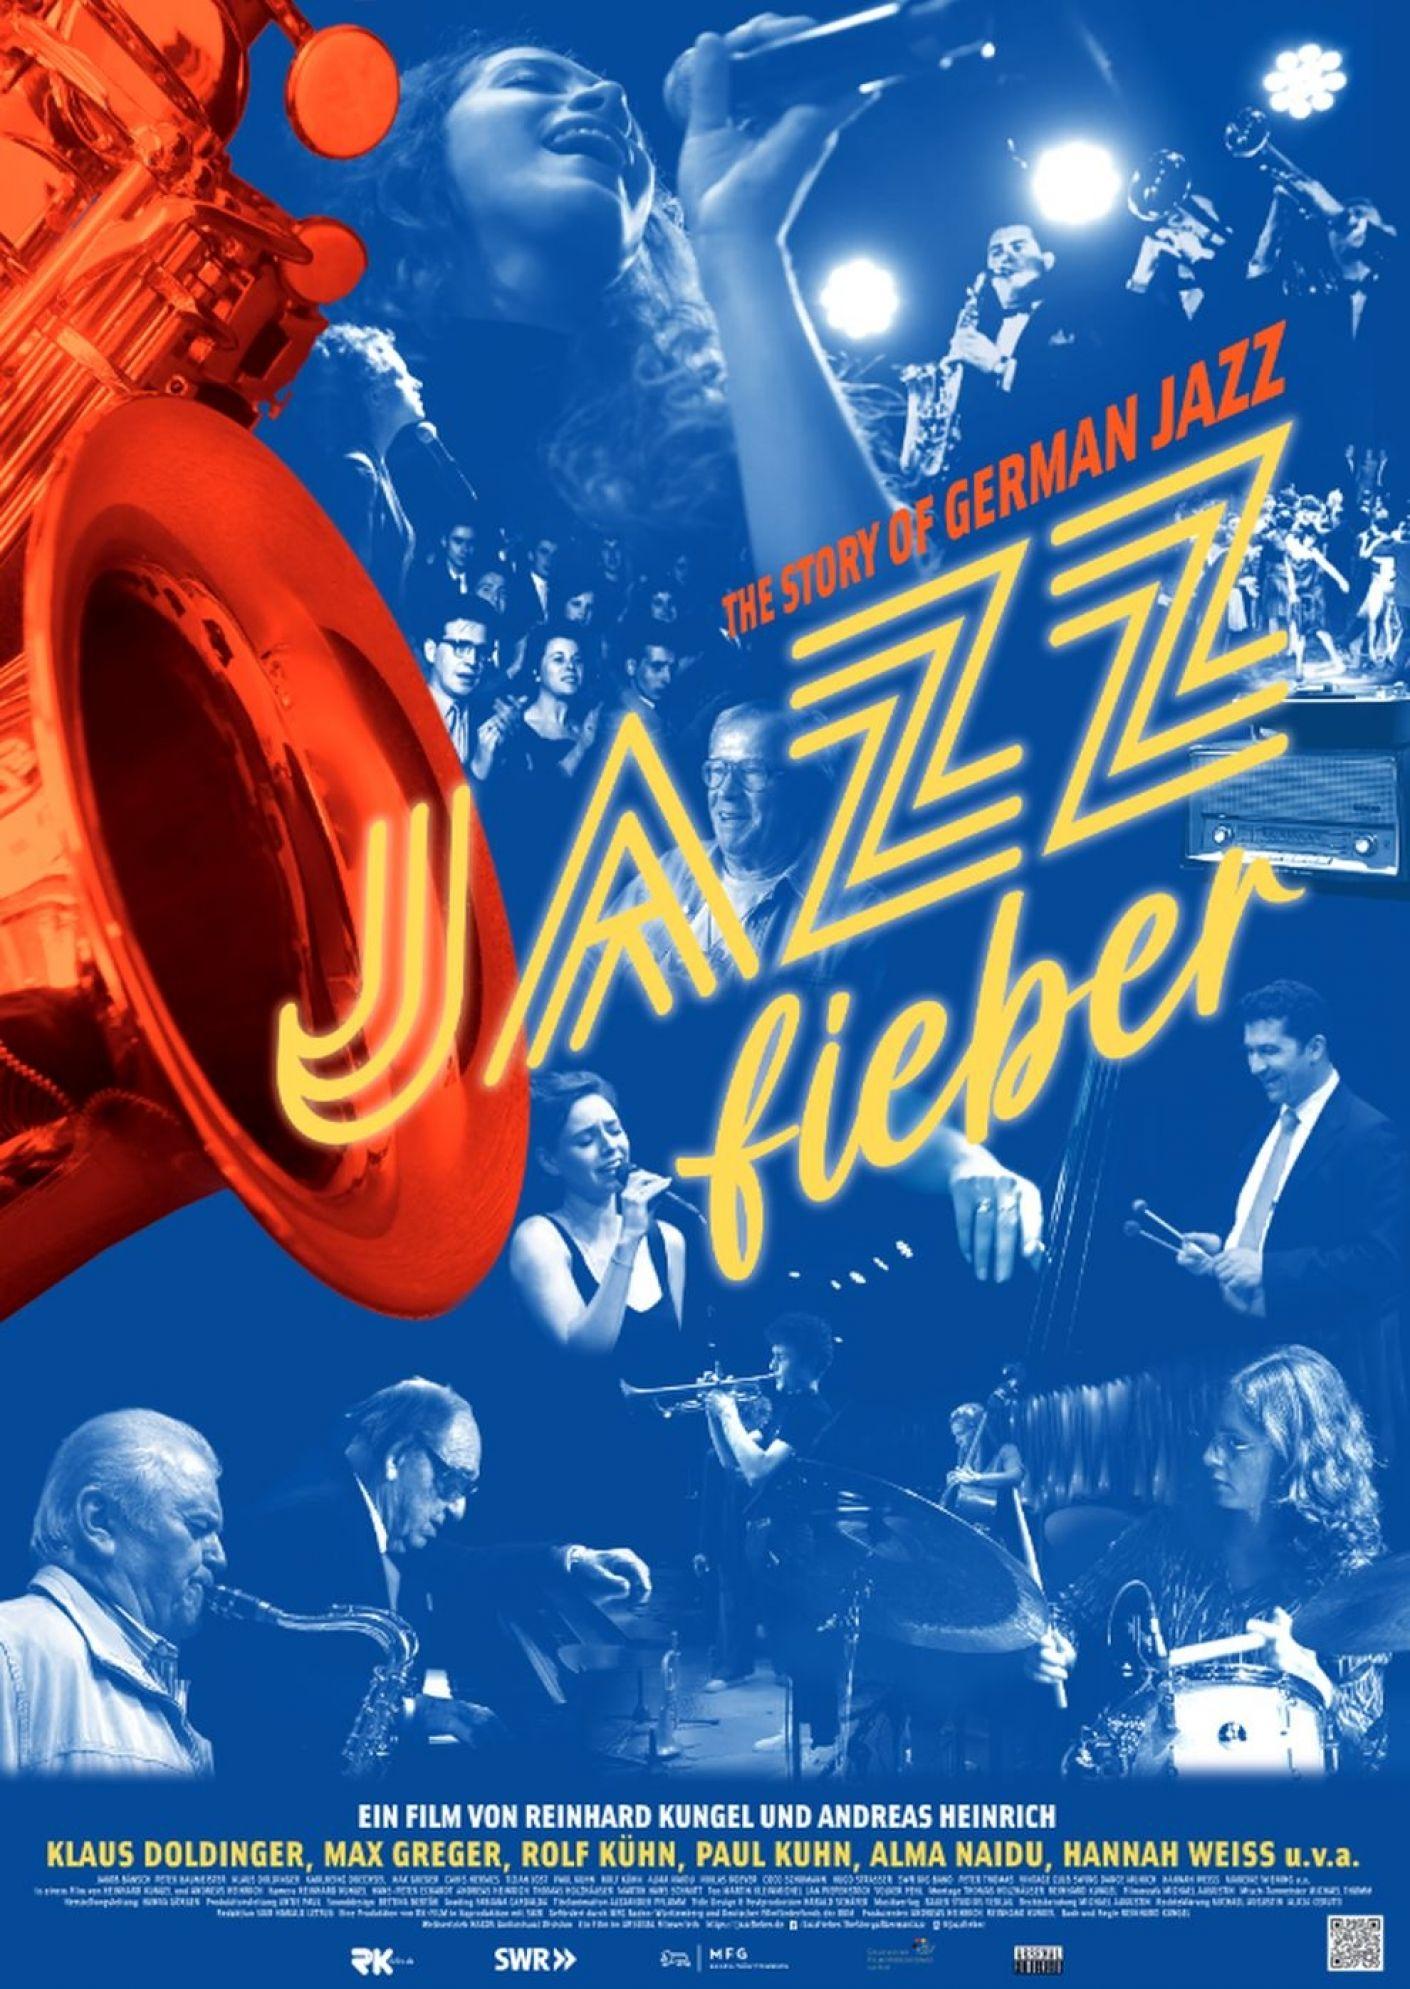 Jazzfieber - The Story of German Jazz